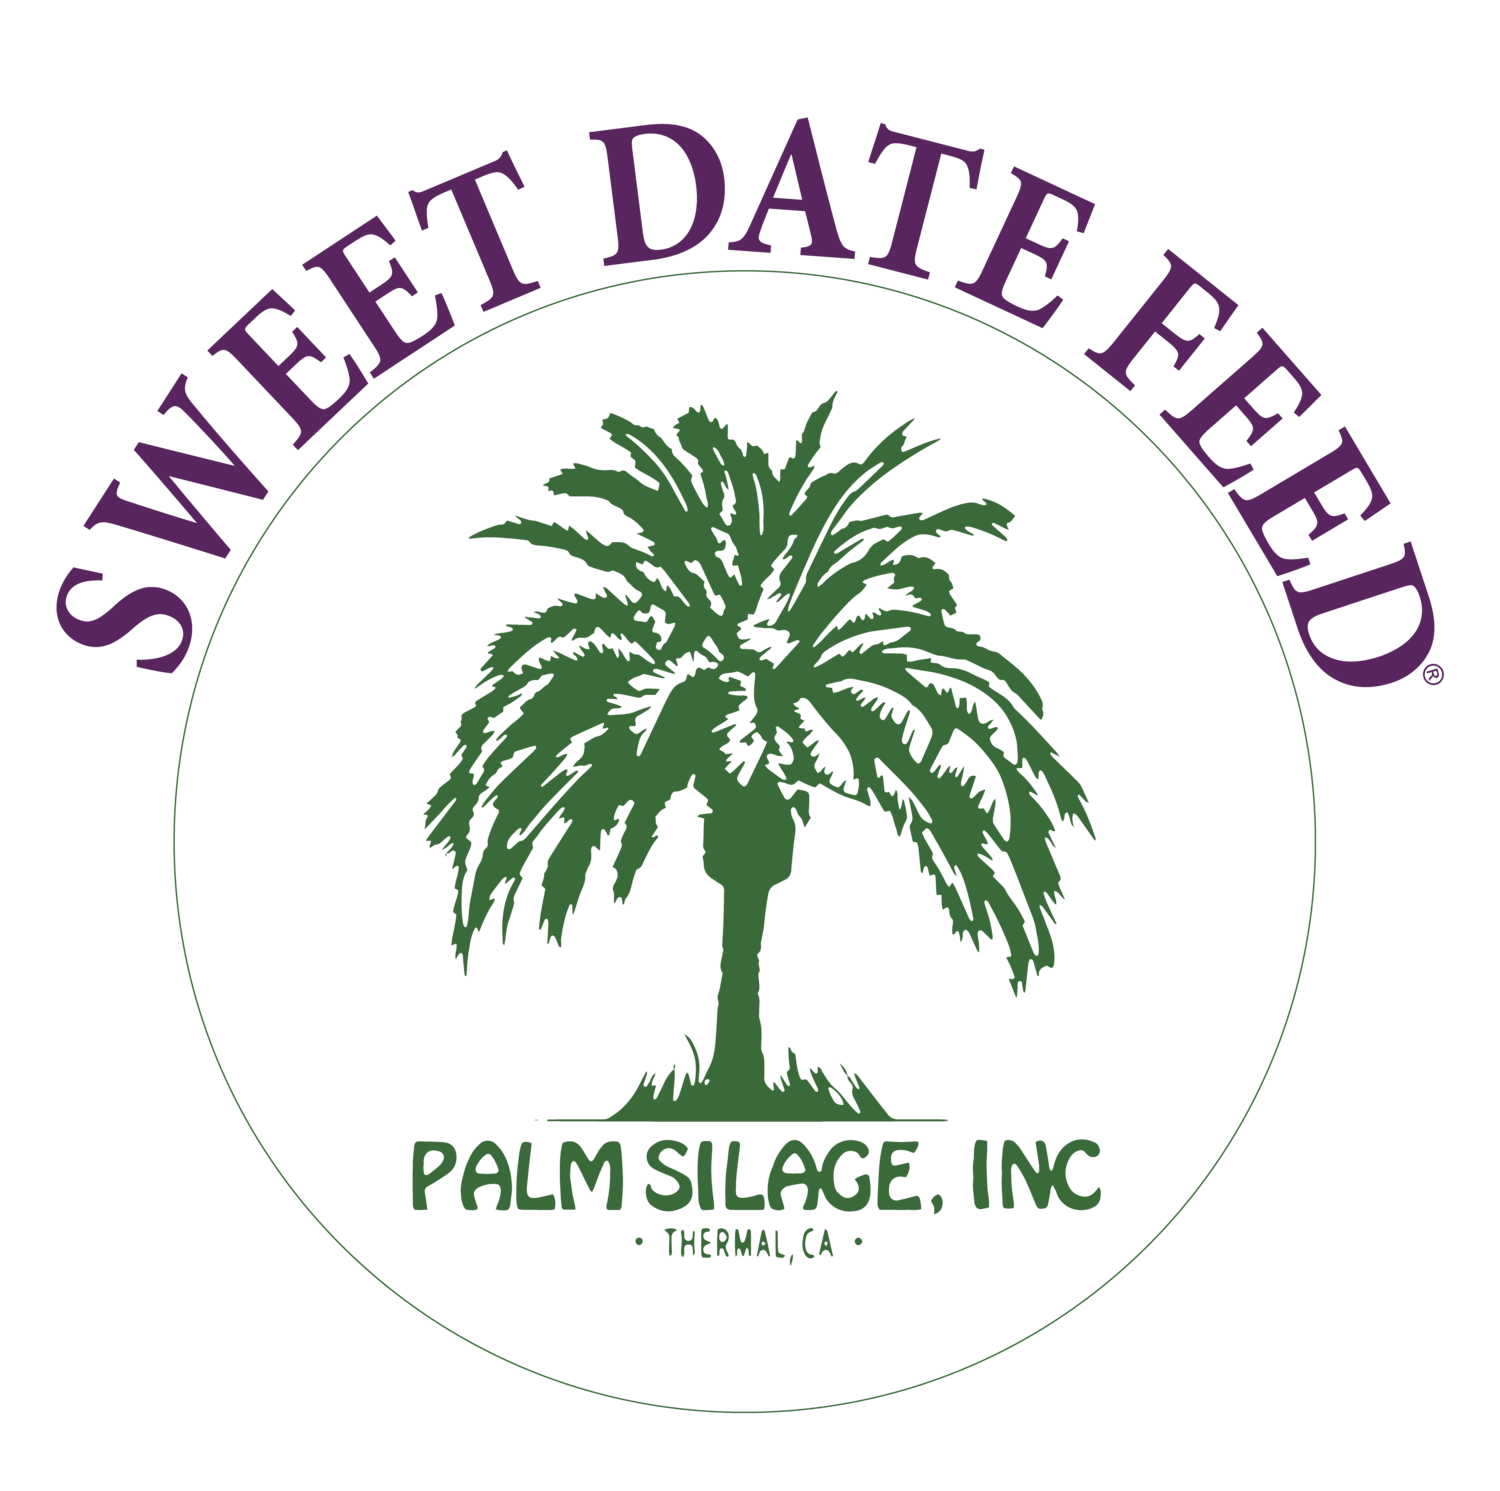 Palm Silage, Inc